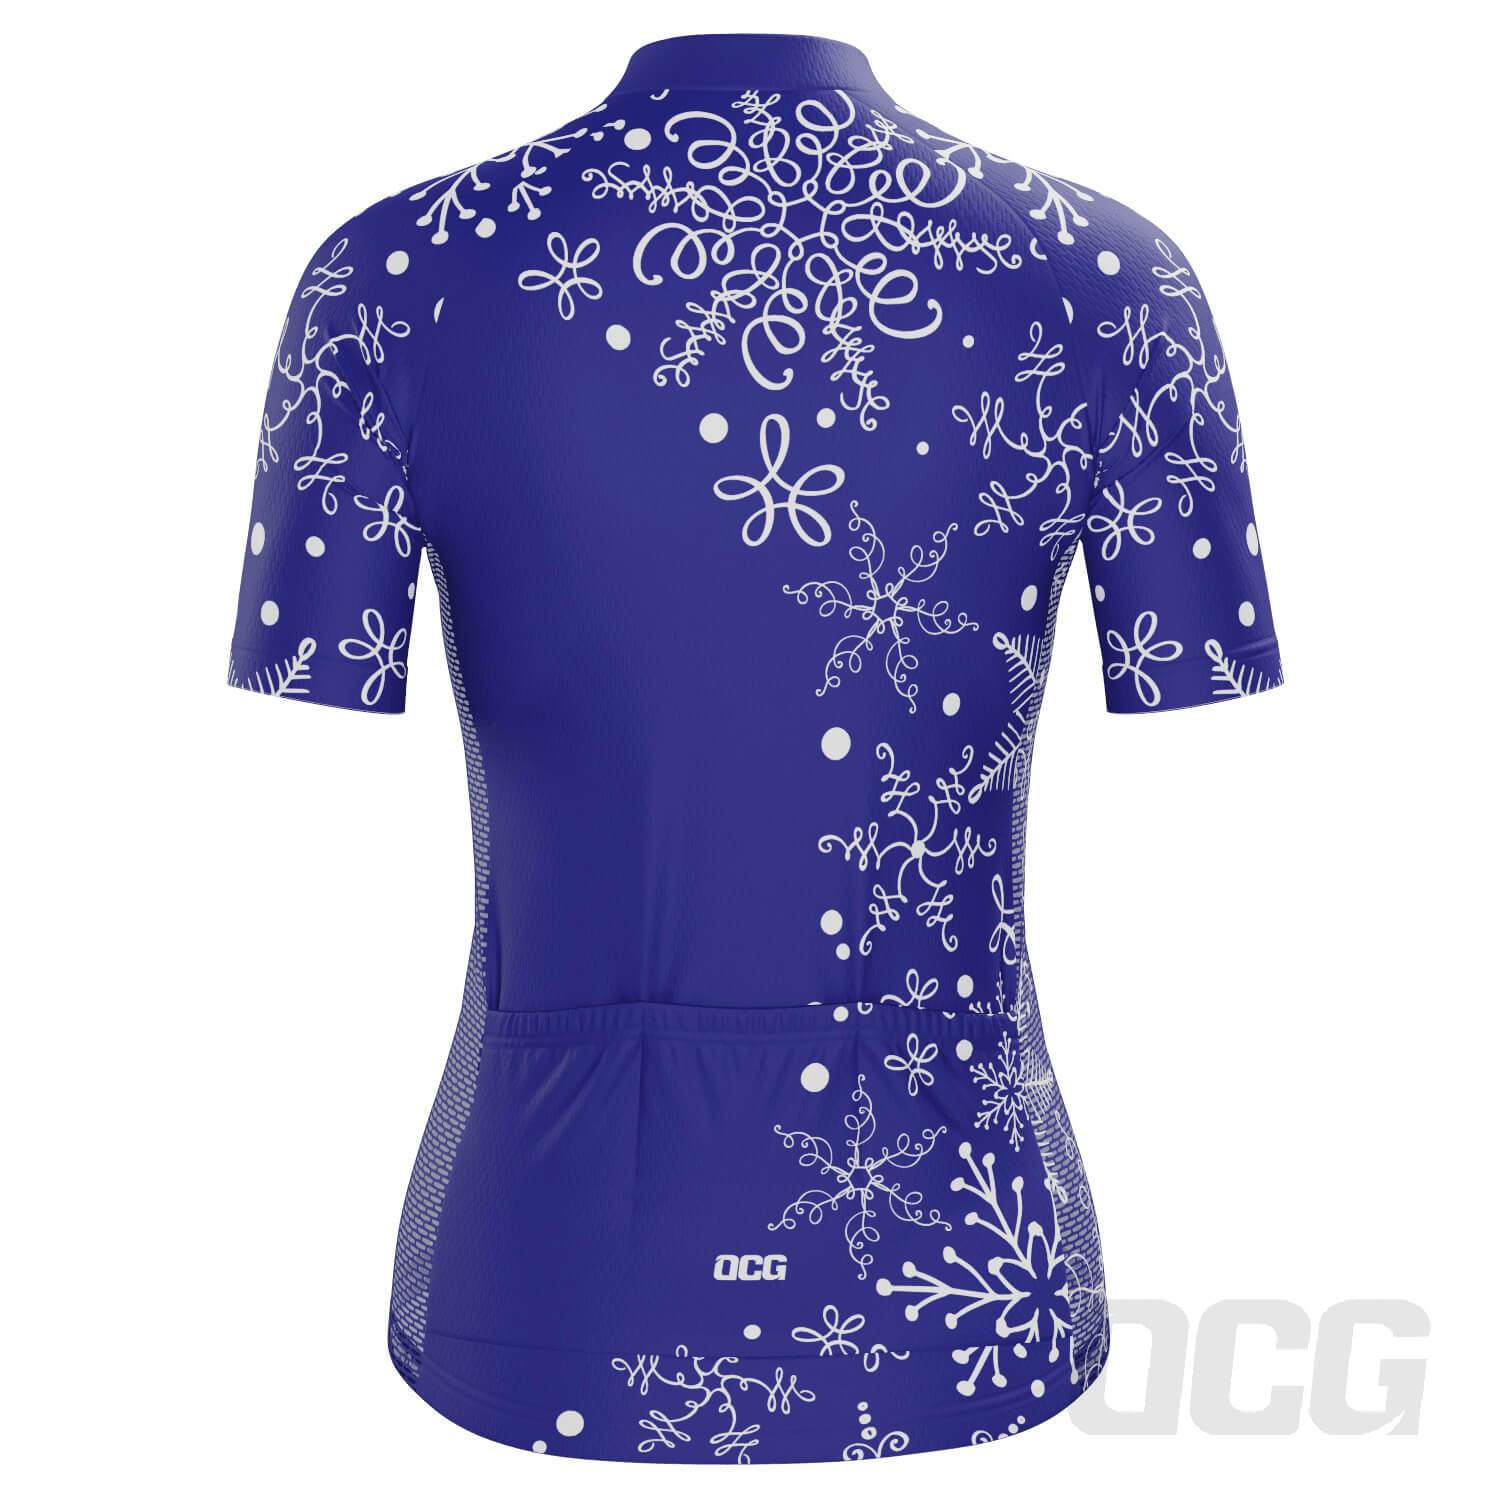 Women's Festive Snowflake Short Sleeve Cycling Jersey